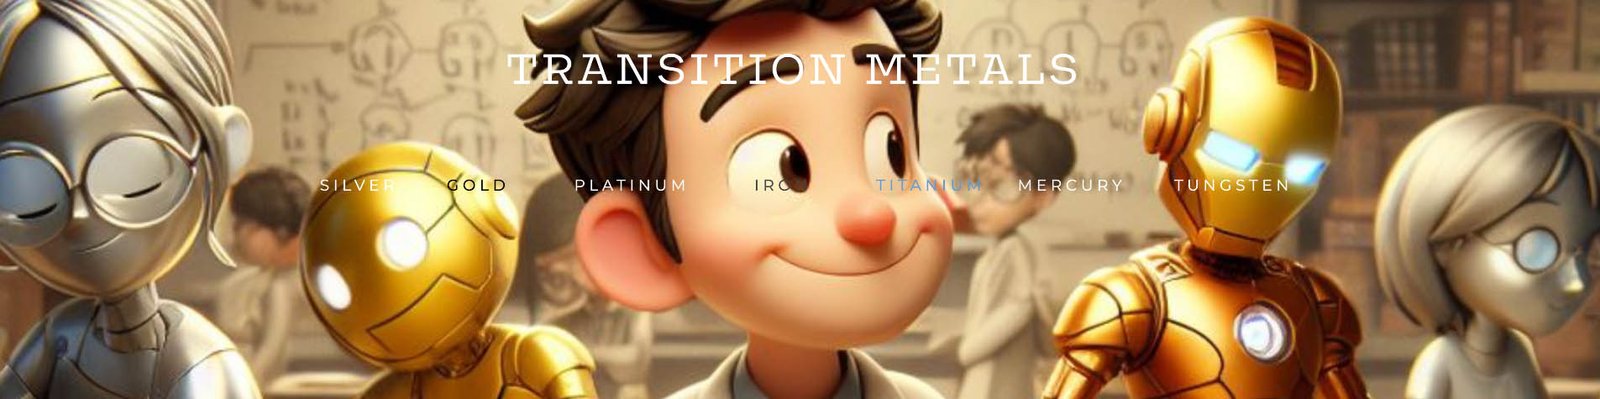 transition metals header image